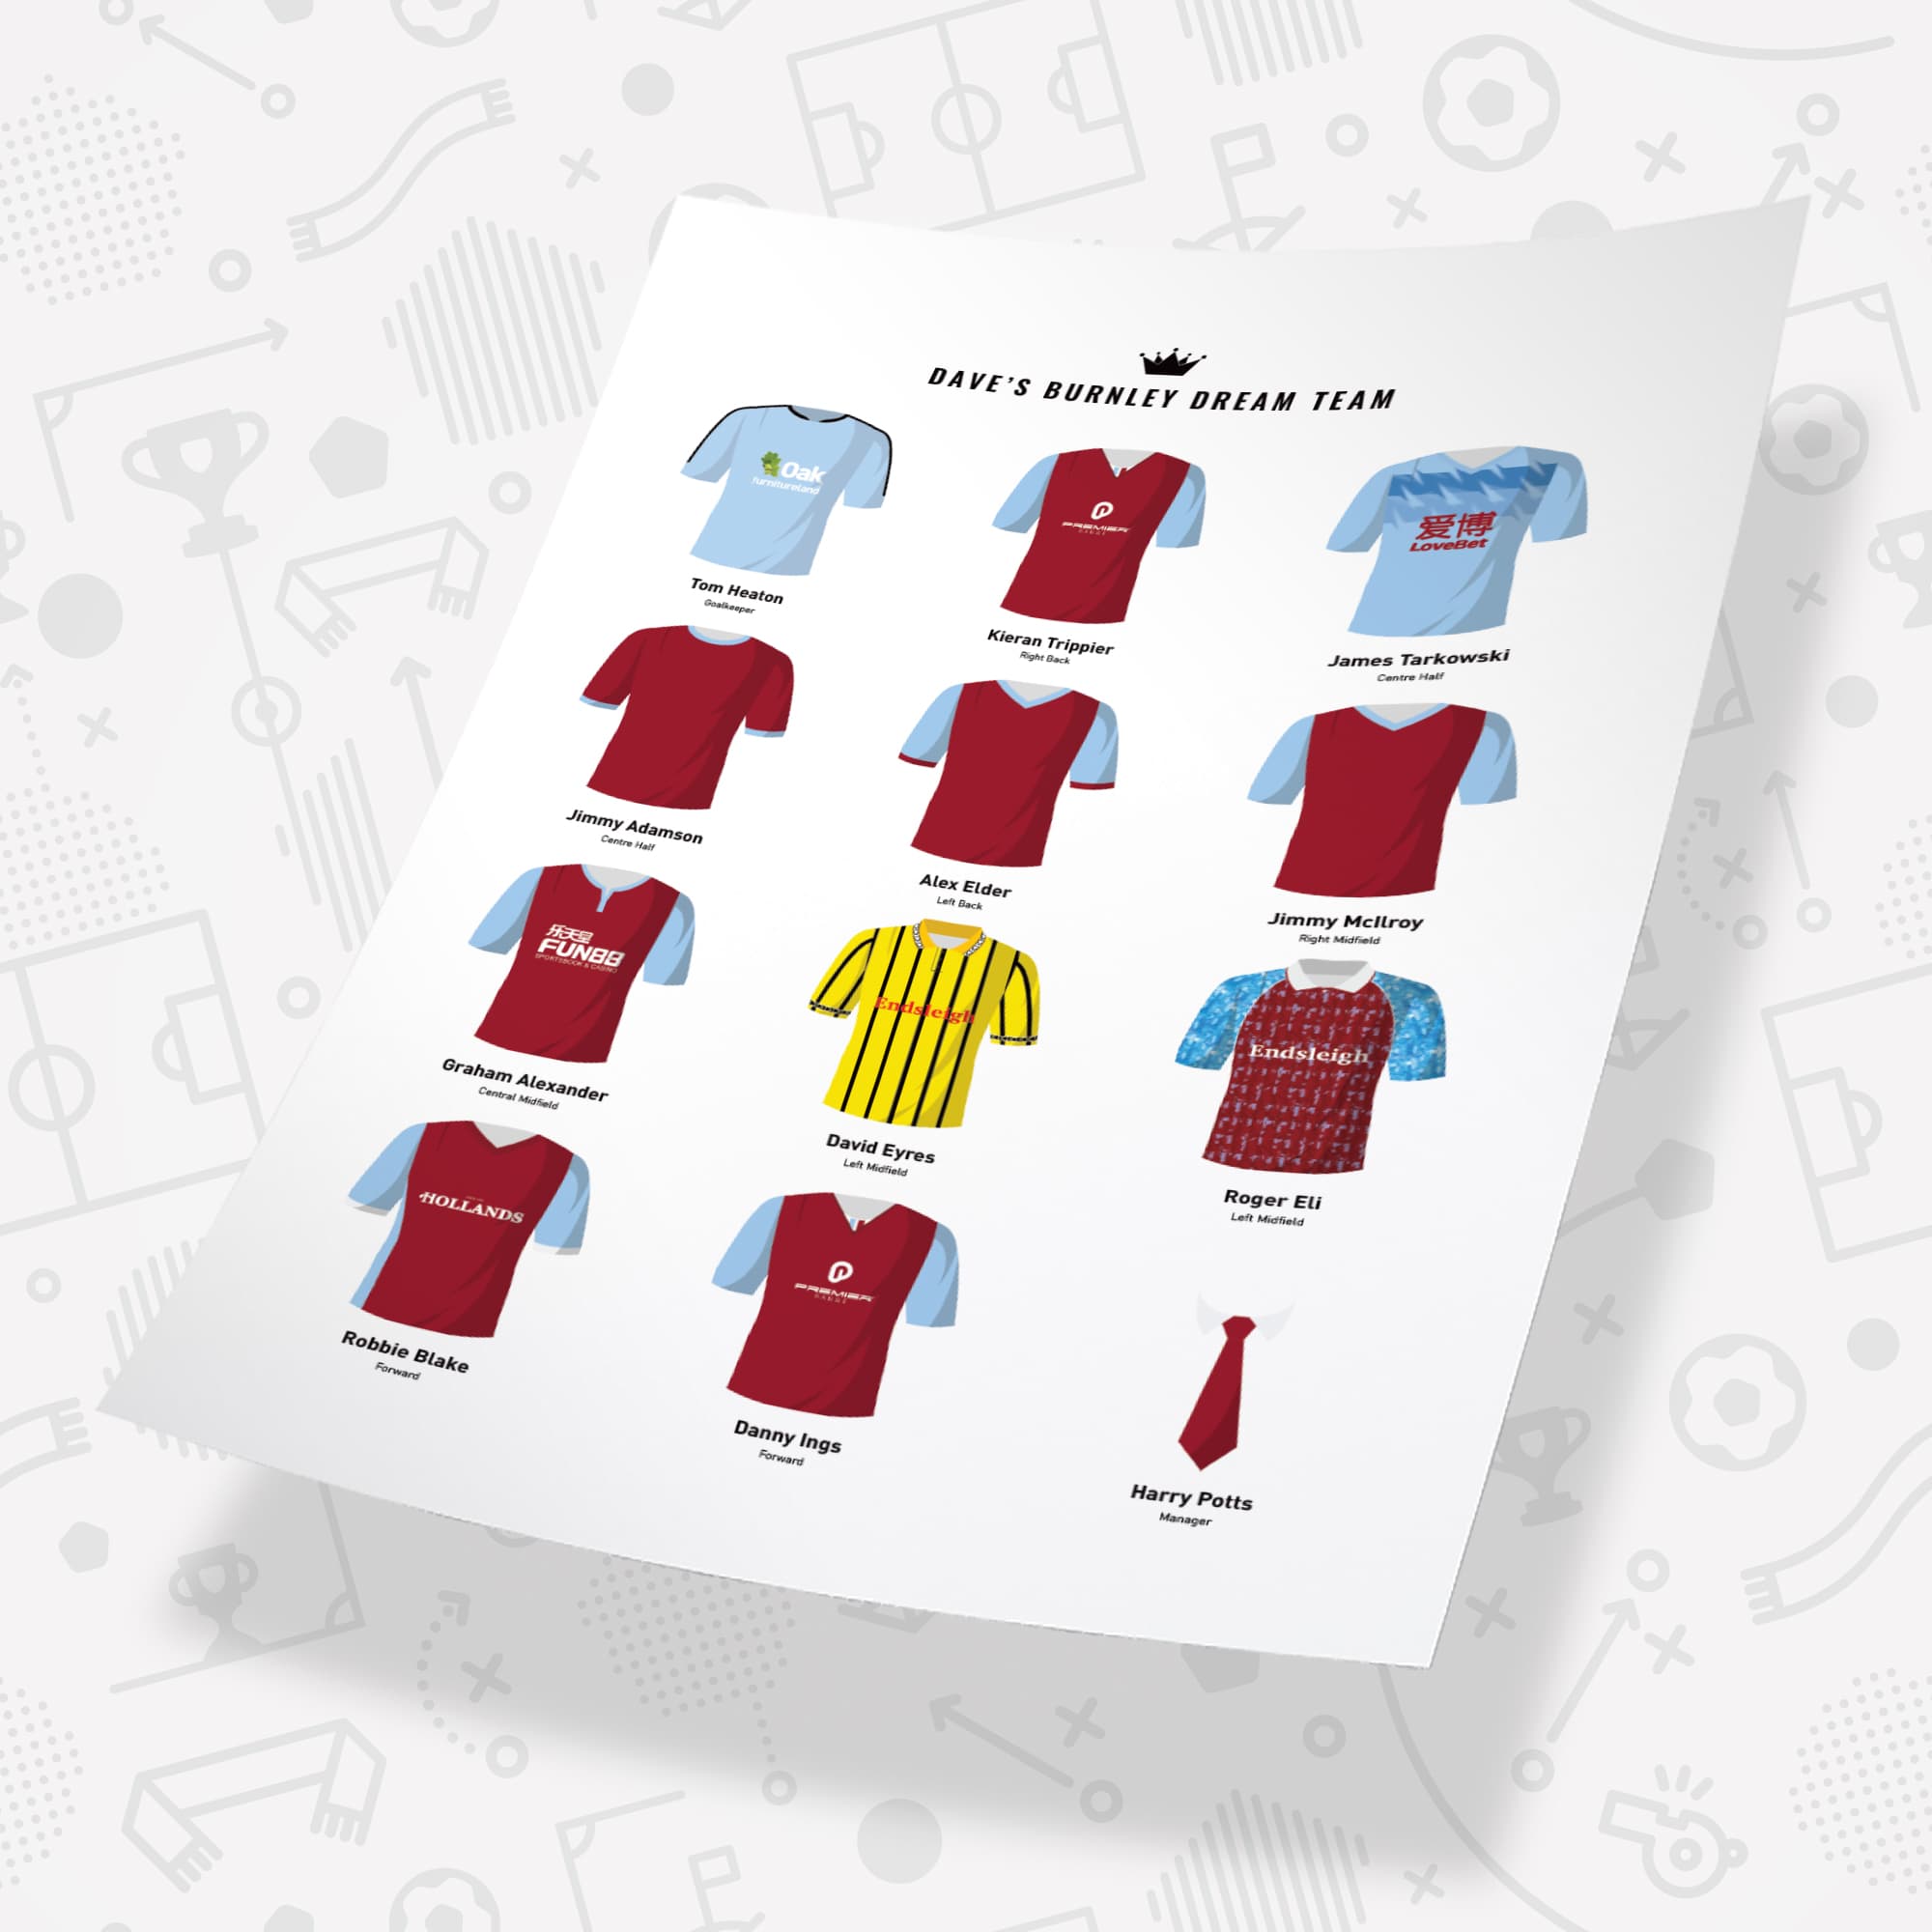 PERSONALISED Burnley Dream Team Football Print Good Team On Paper